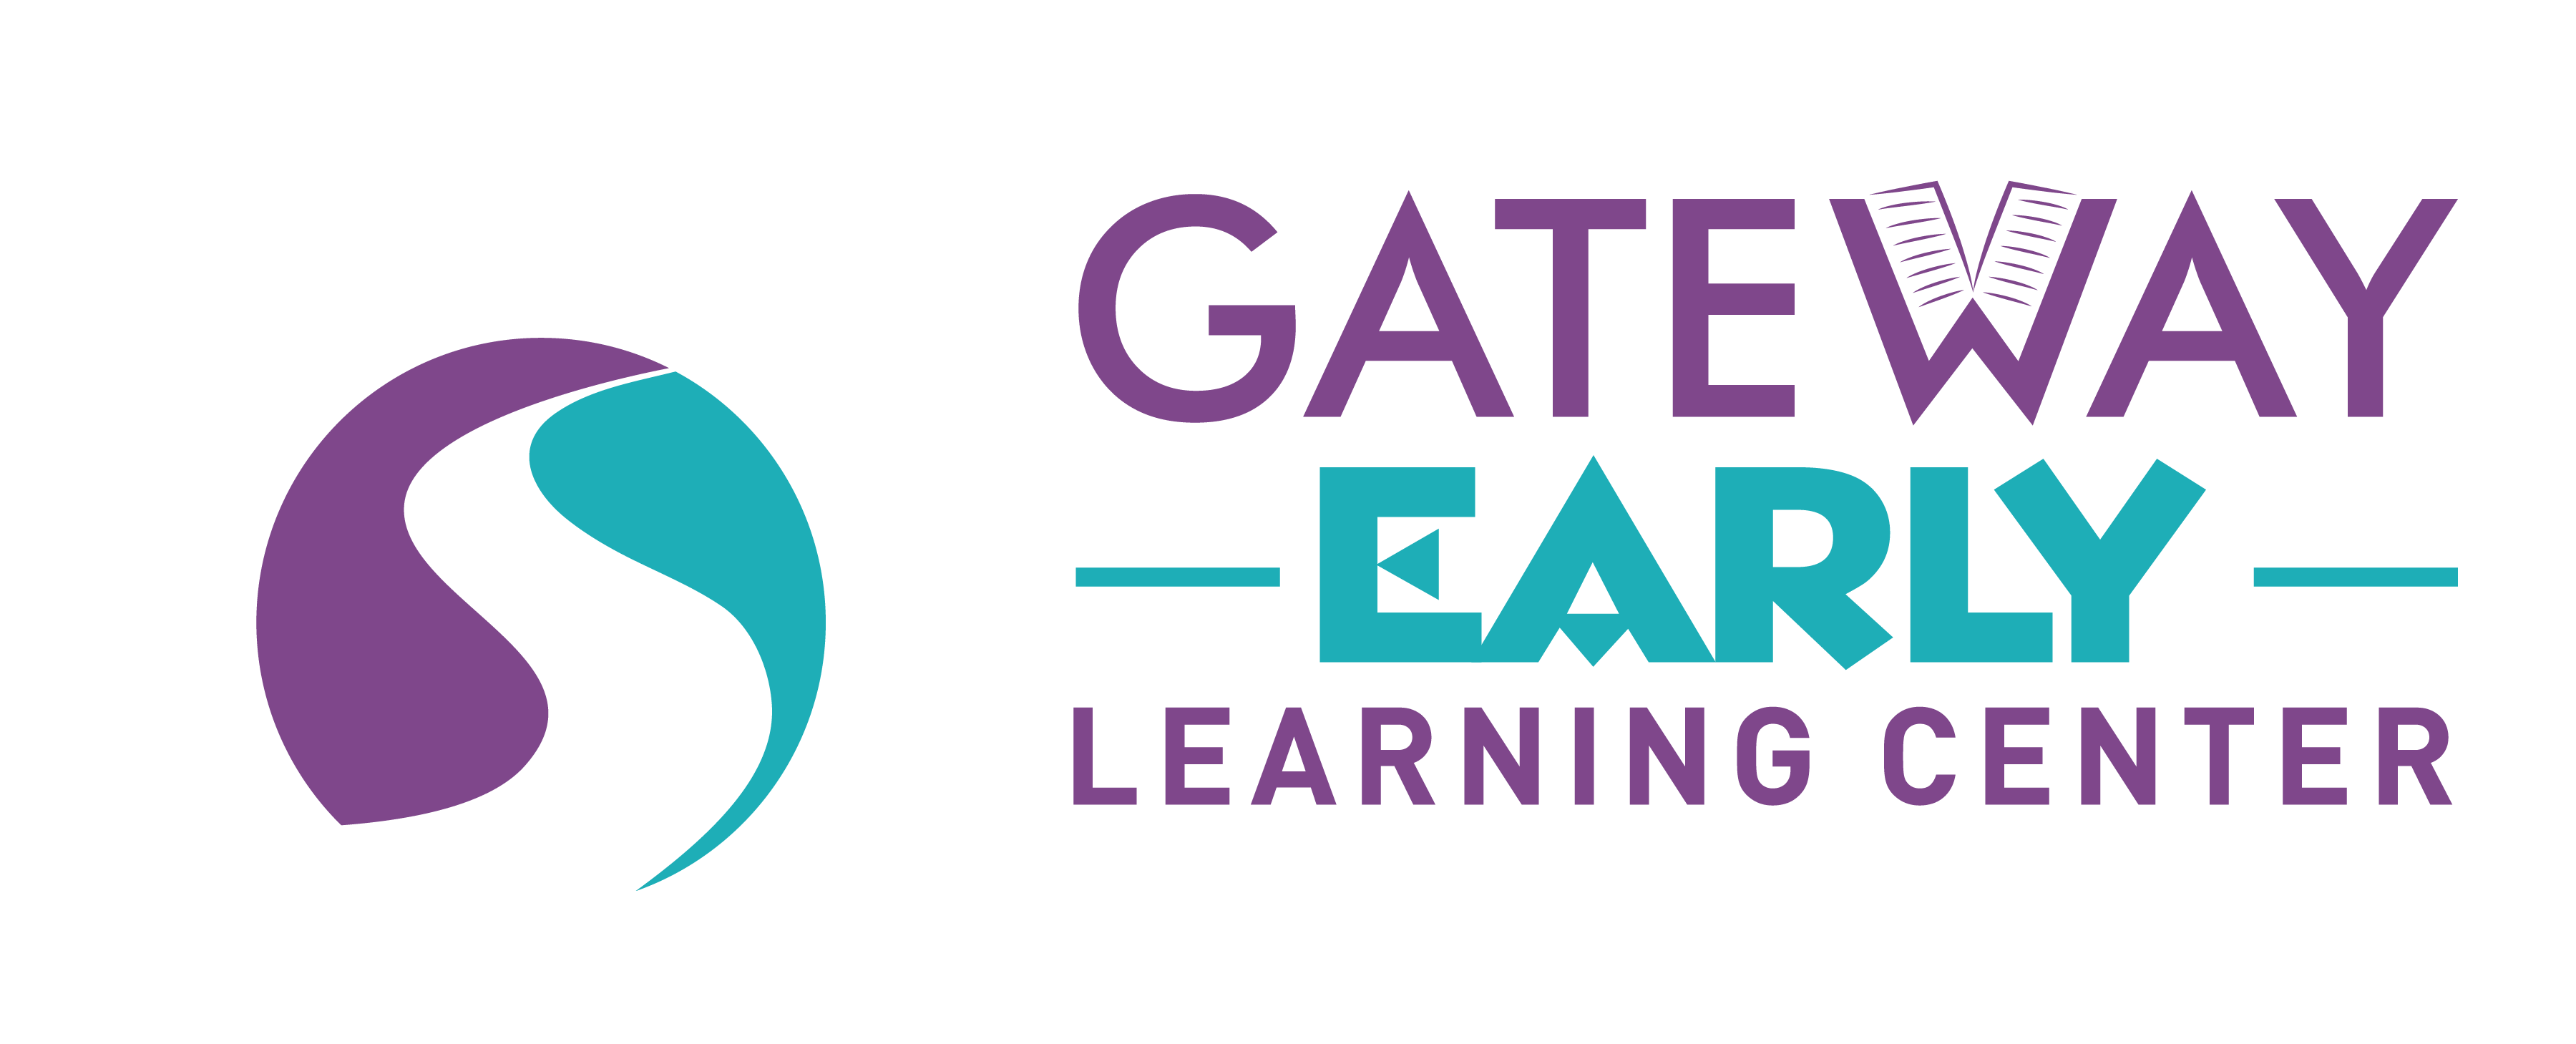 Gateway Early Learning Center LLC